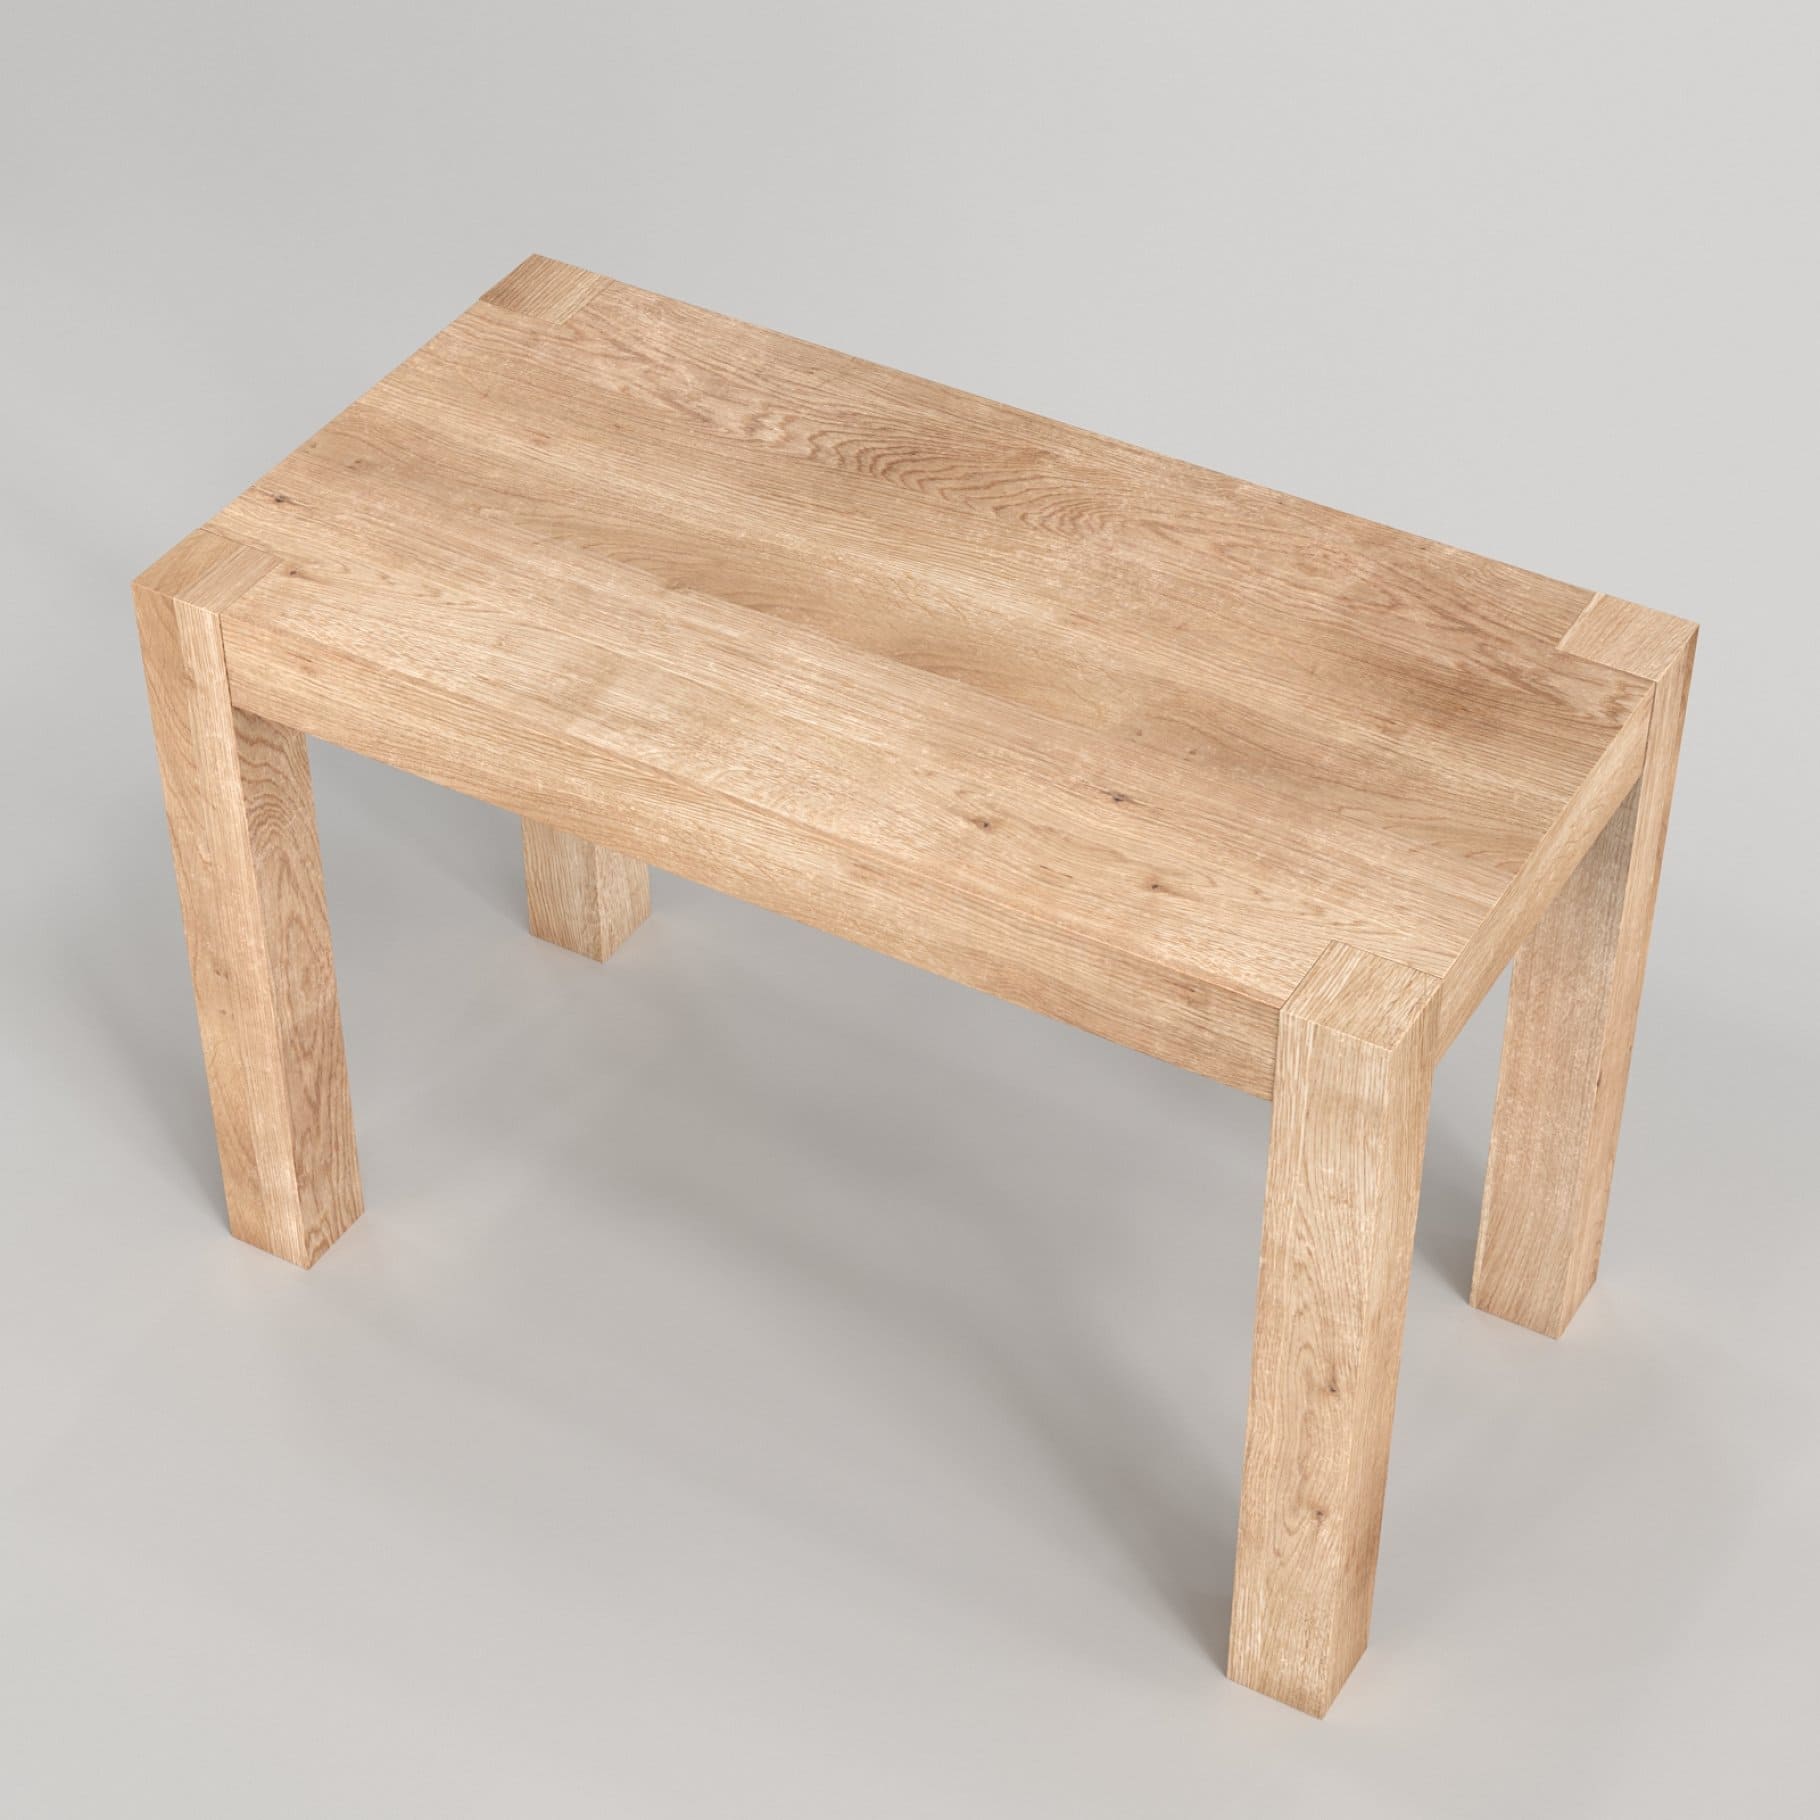 Scandinavian desk with square wooden legs.